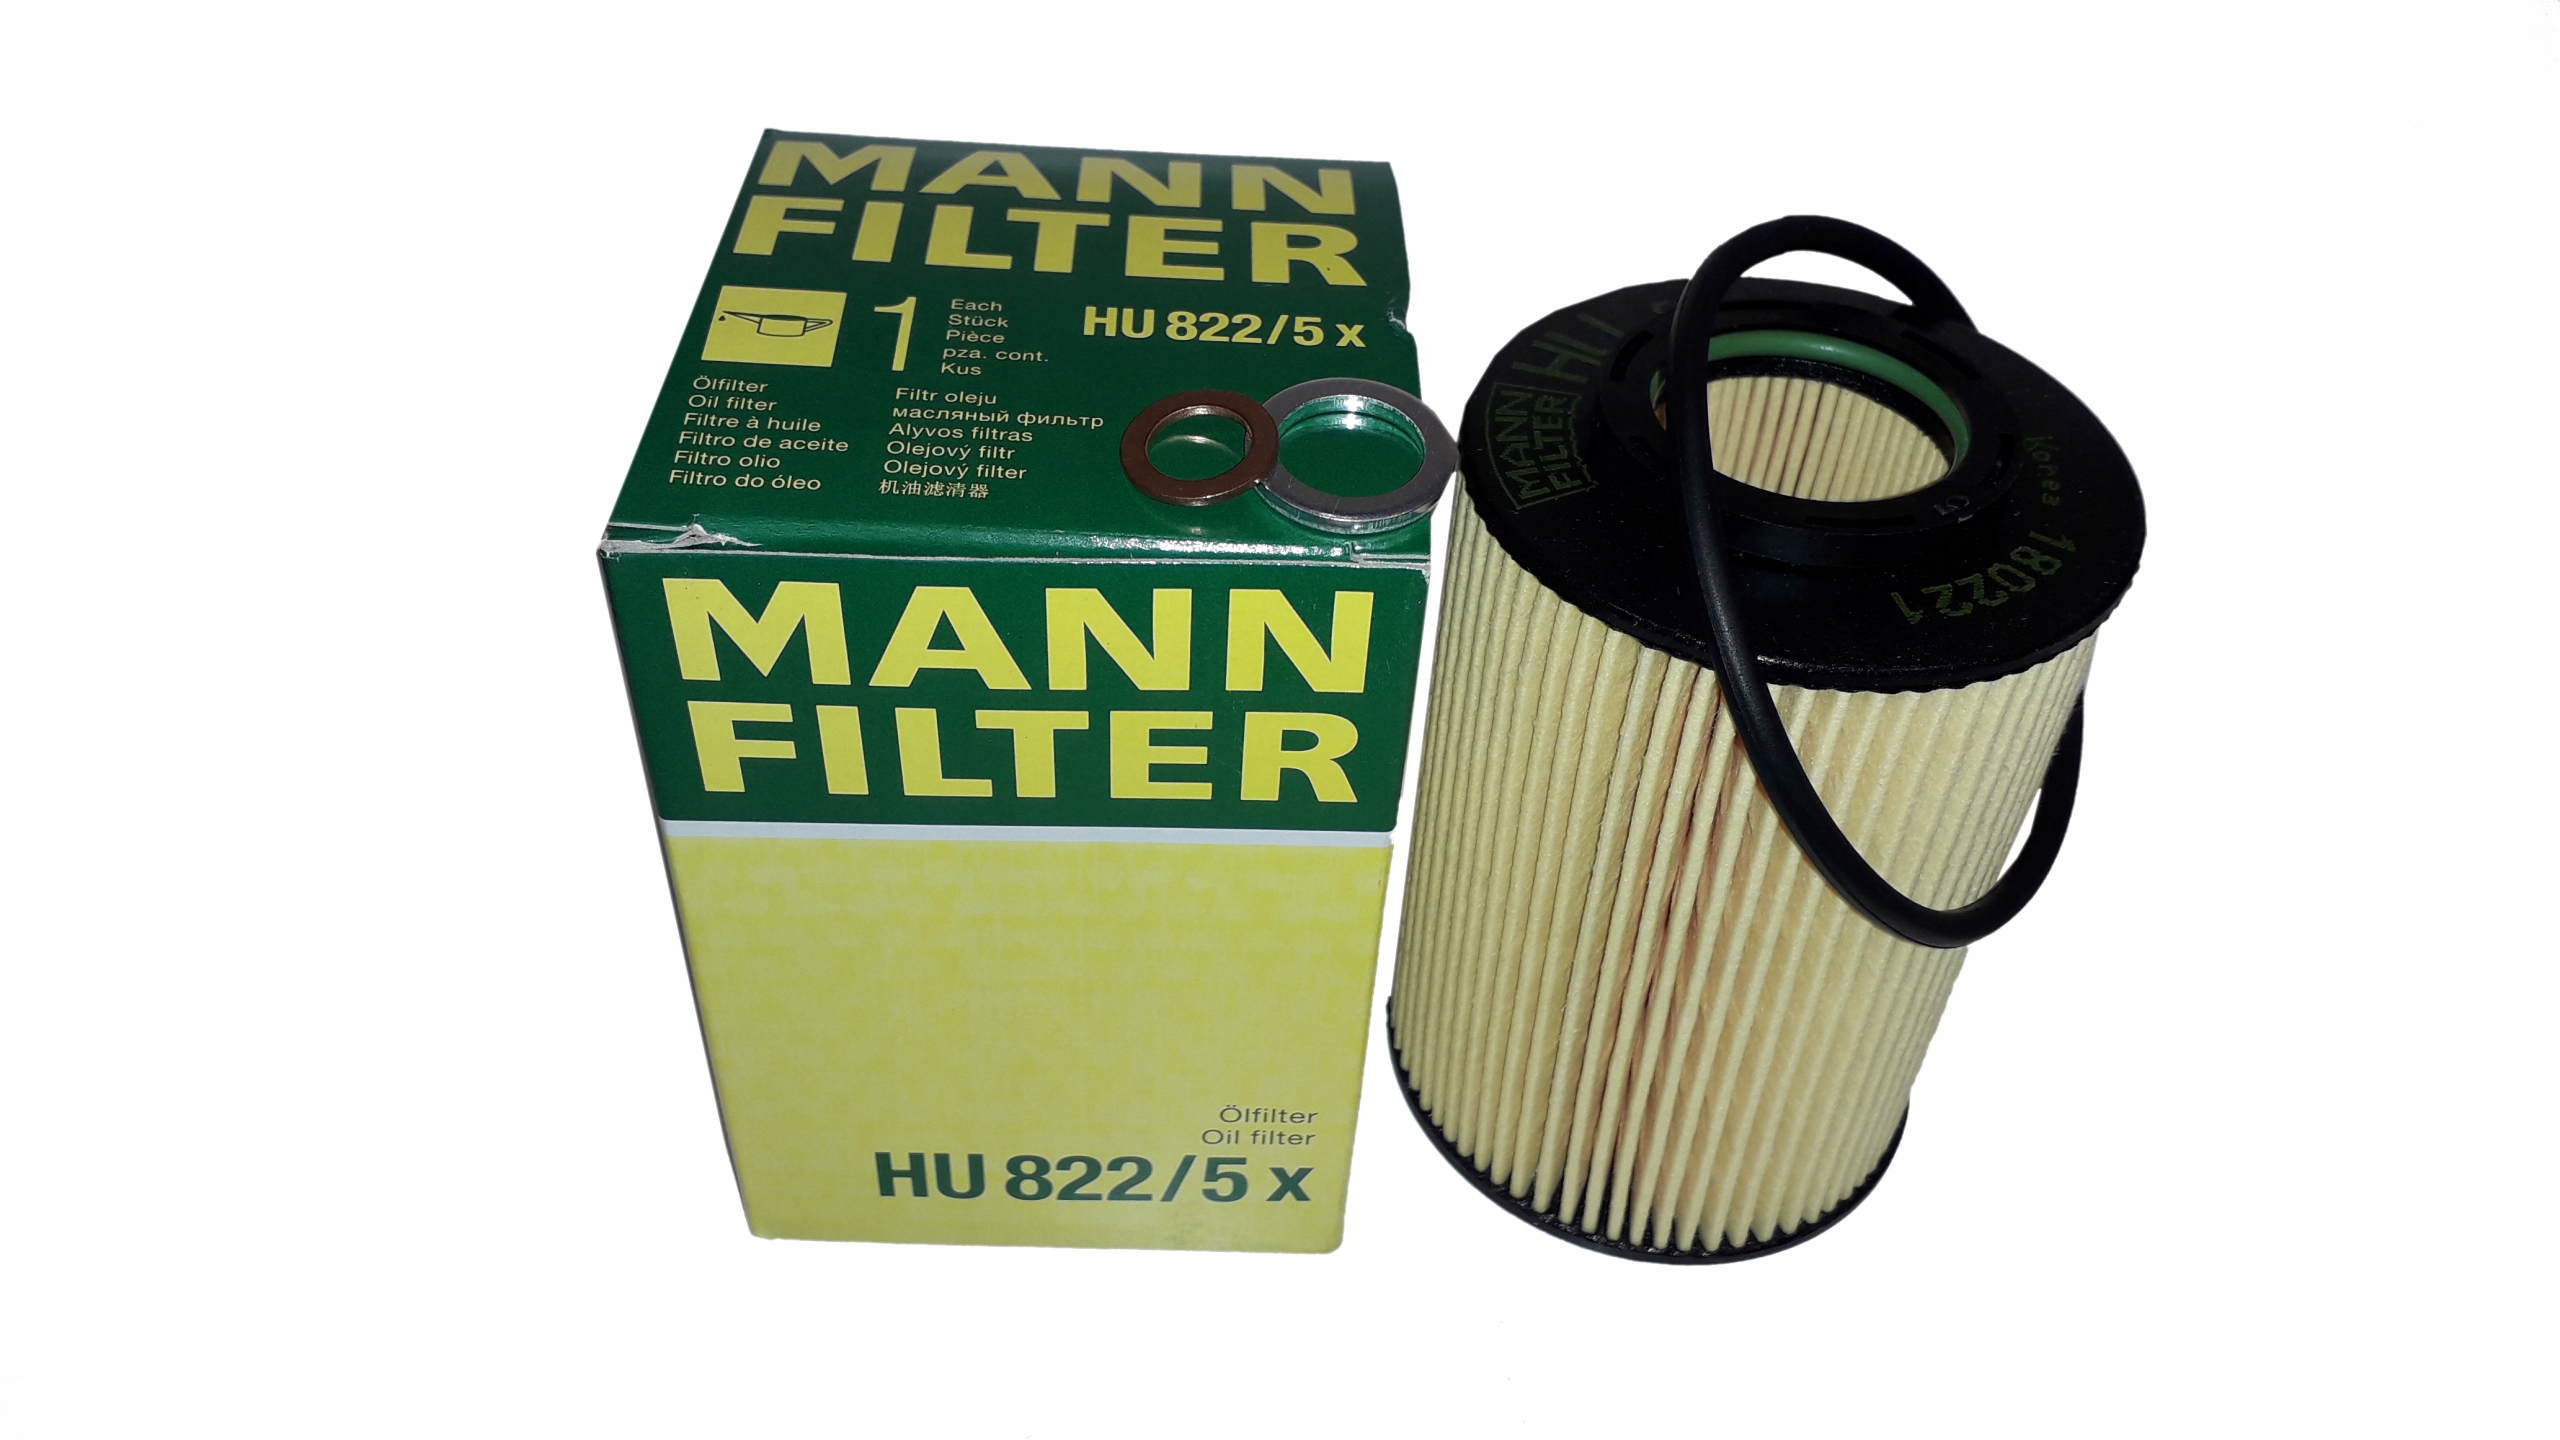 Масло санта фе 2021. Kia k5 2.5 масляный фильтр Mann-Filter. Хендай Санта Фе фильтр масляный Mann 2.0 \. Mann фильтр масляный hu822/5x. Kia Forte 2009 масляный фильтр Mann.